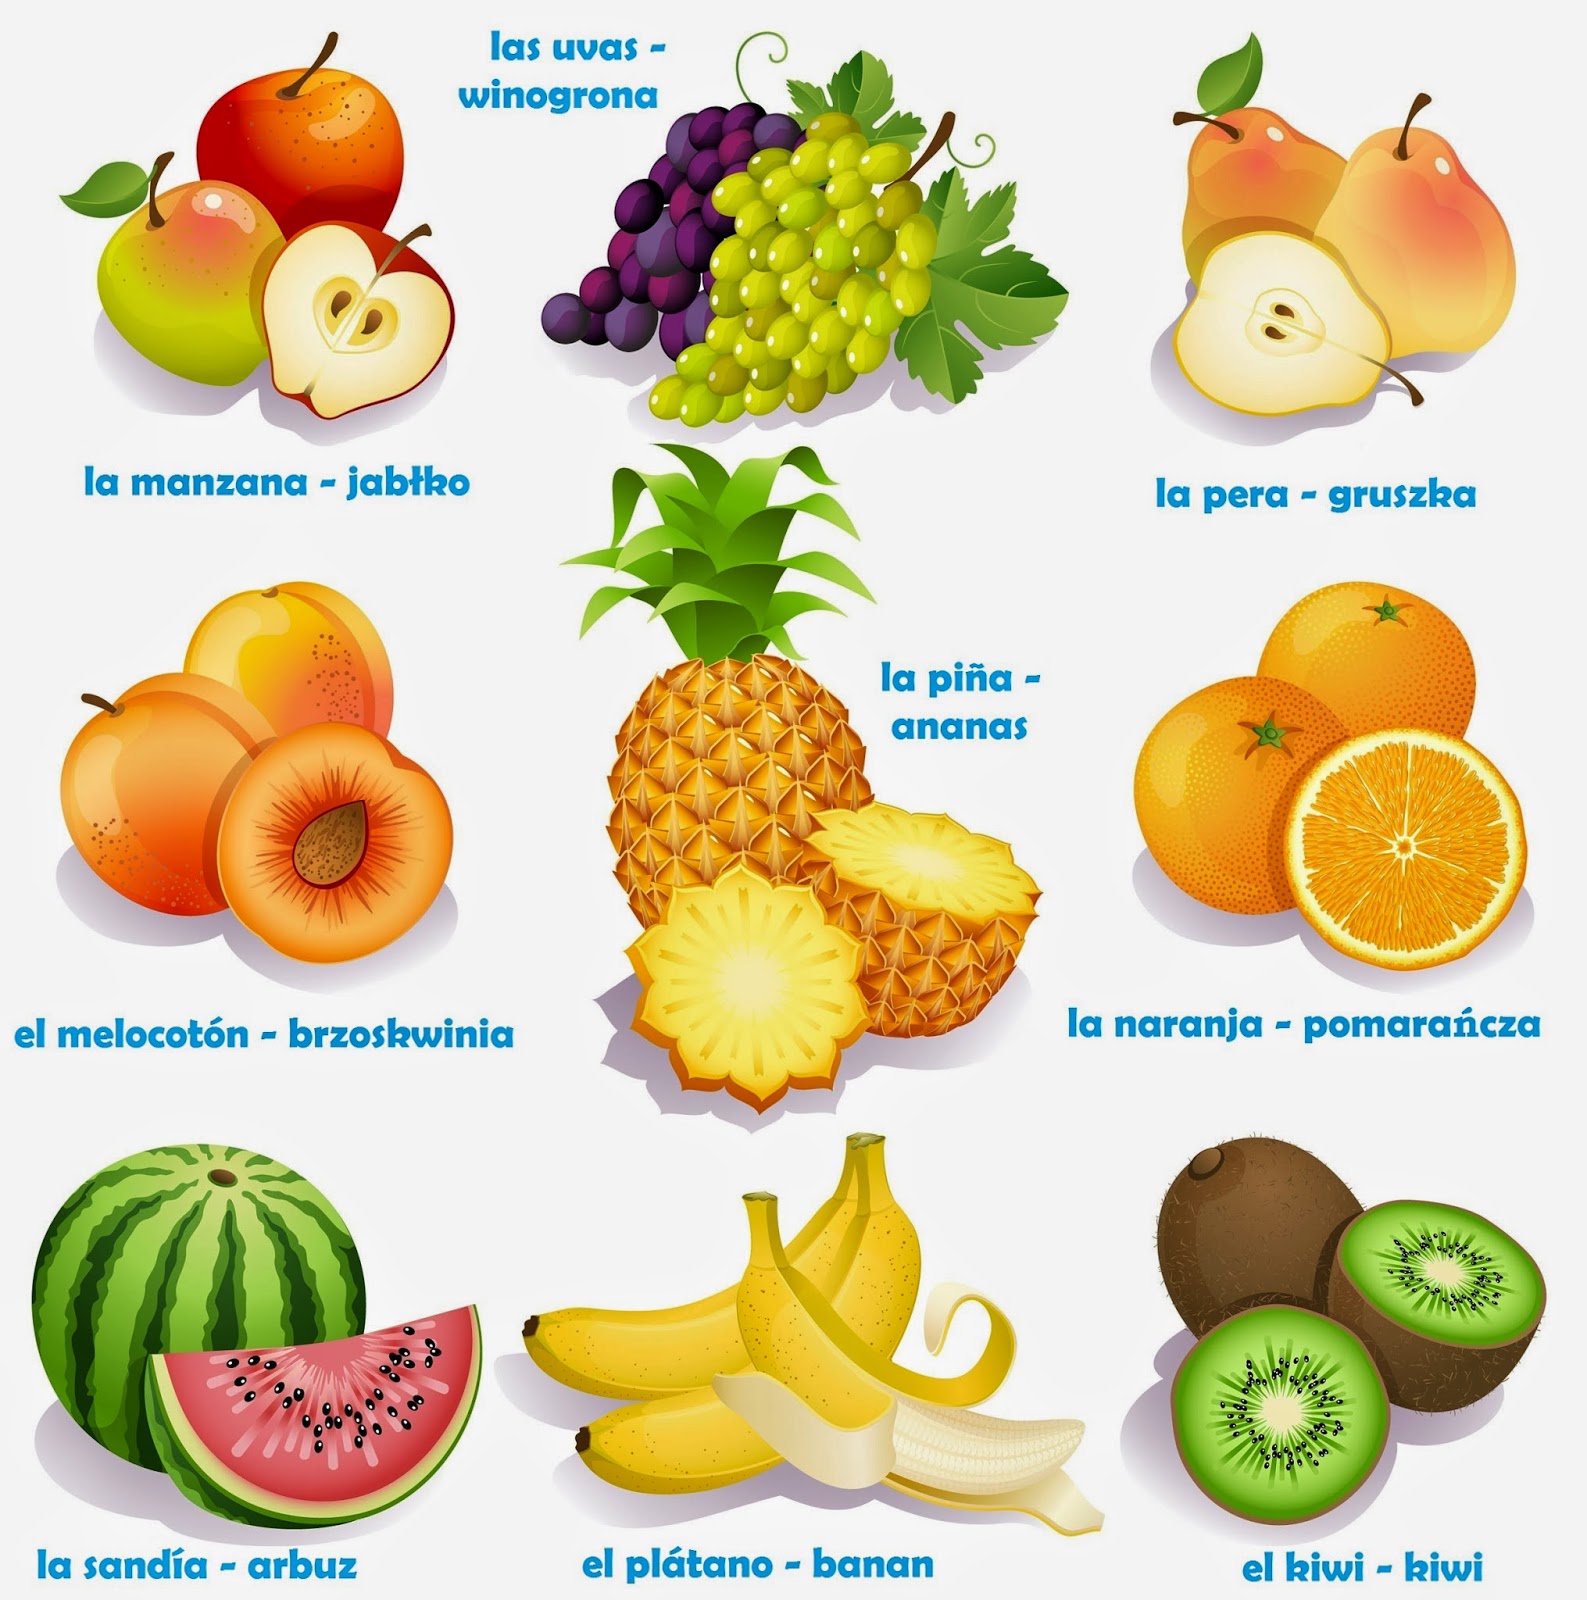 hiszpañski od kuchni: Las frutas - Owoce